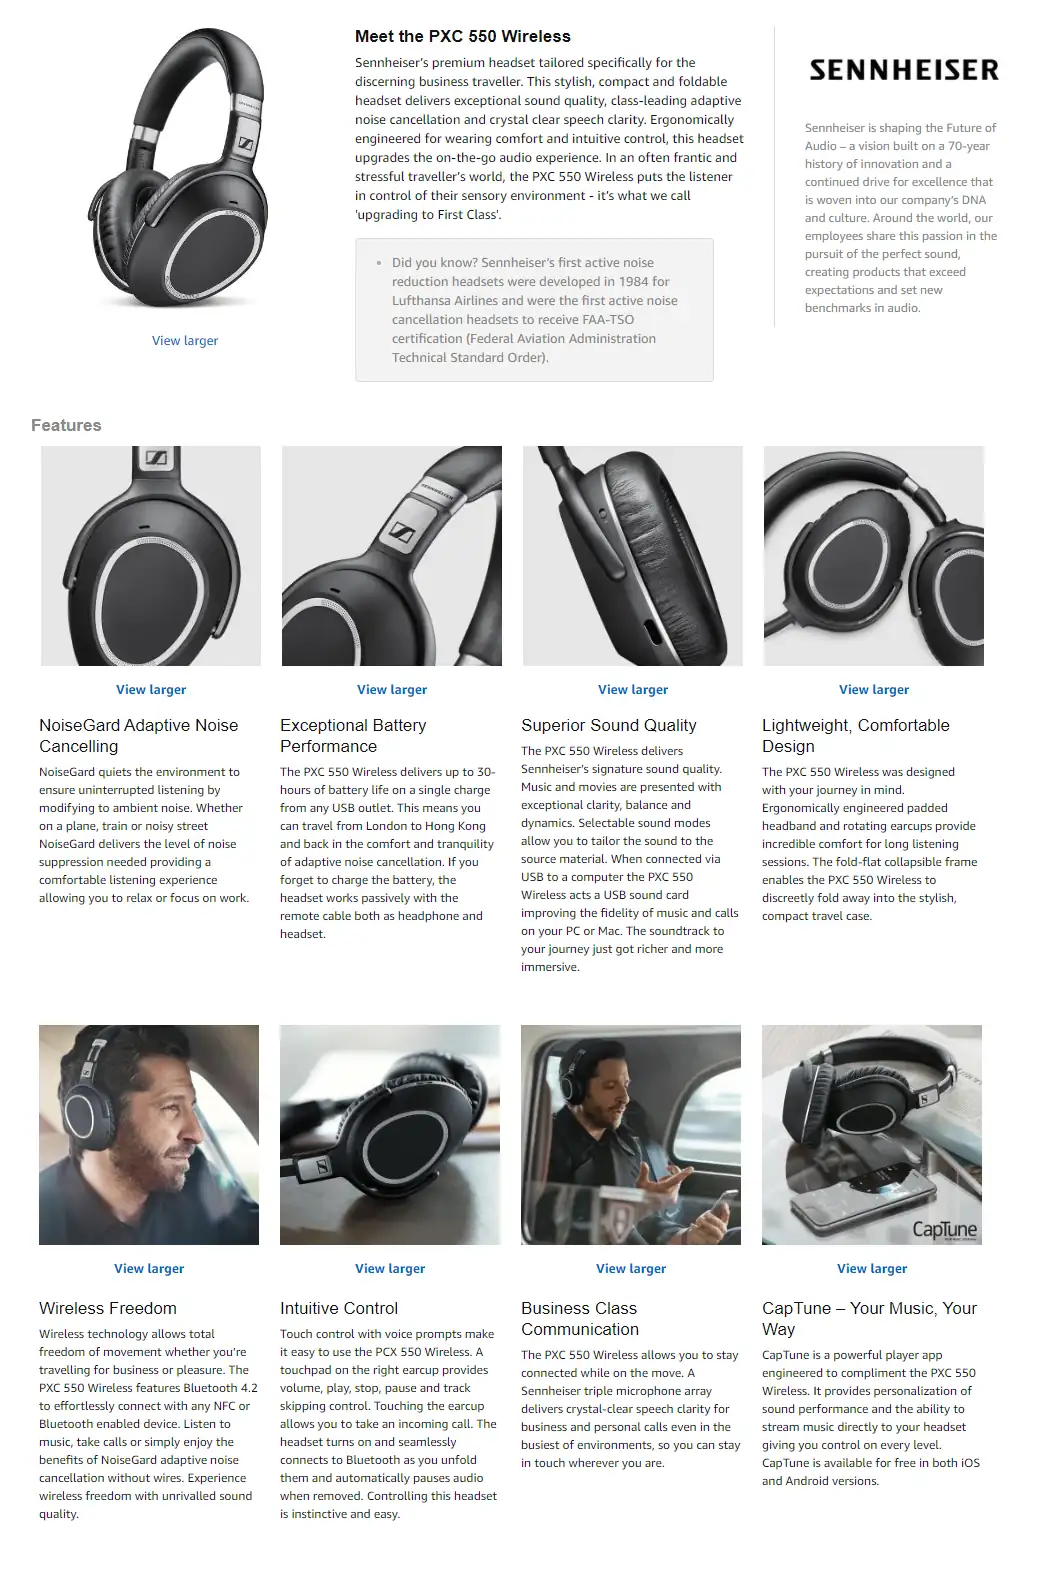 Product description - Meet the PXC 550 Wireless headset